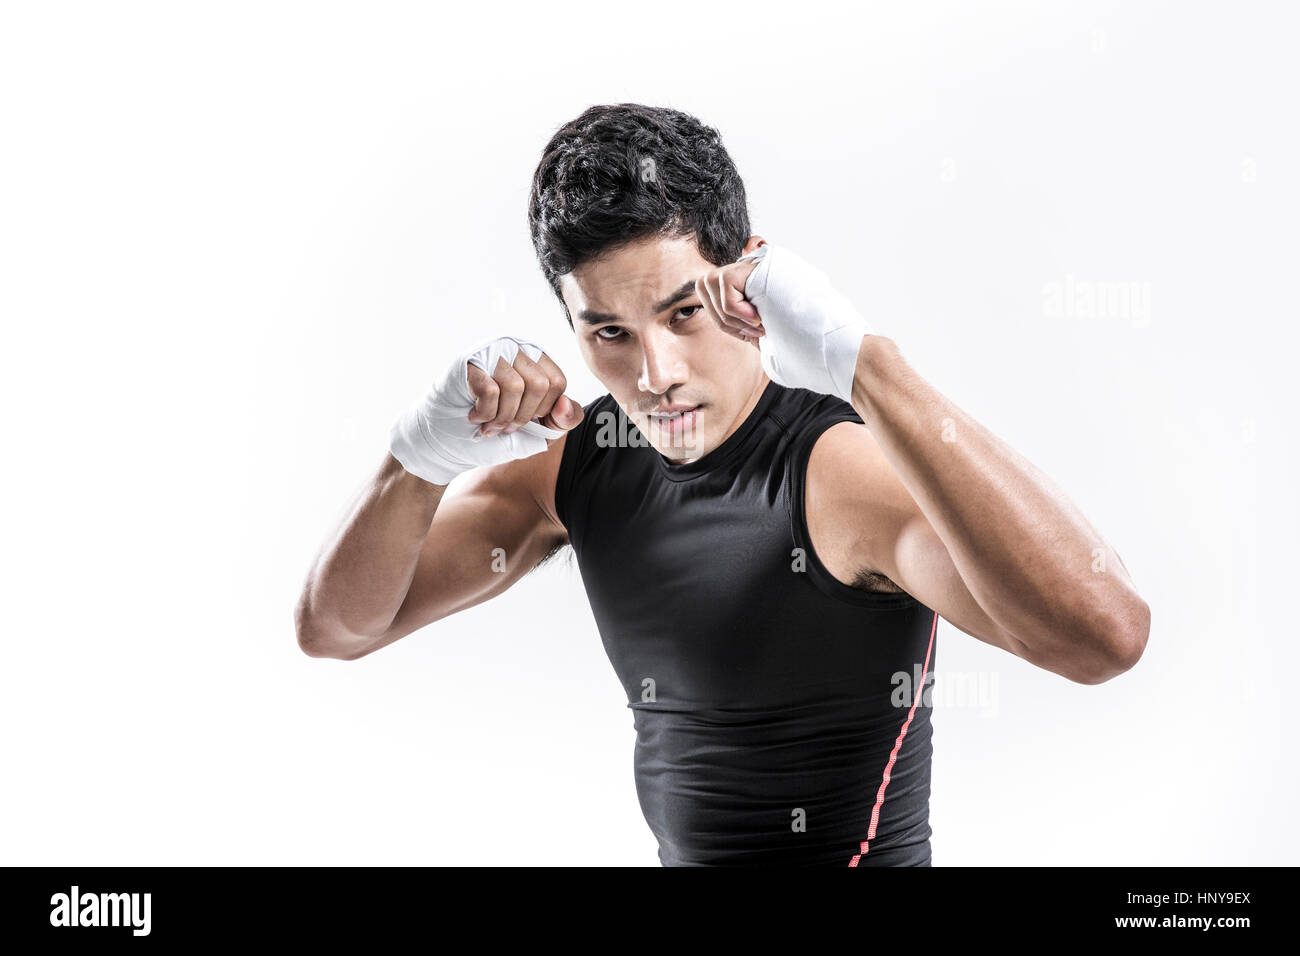 Kickboxing player Stock Photo